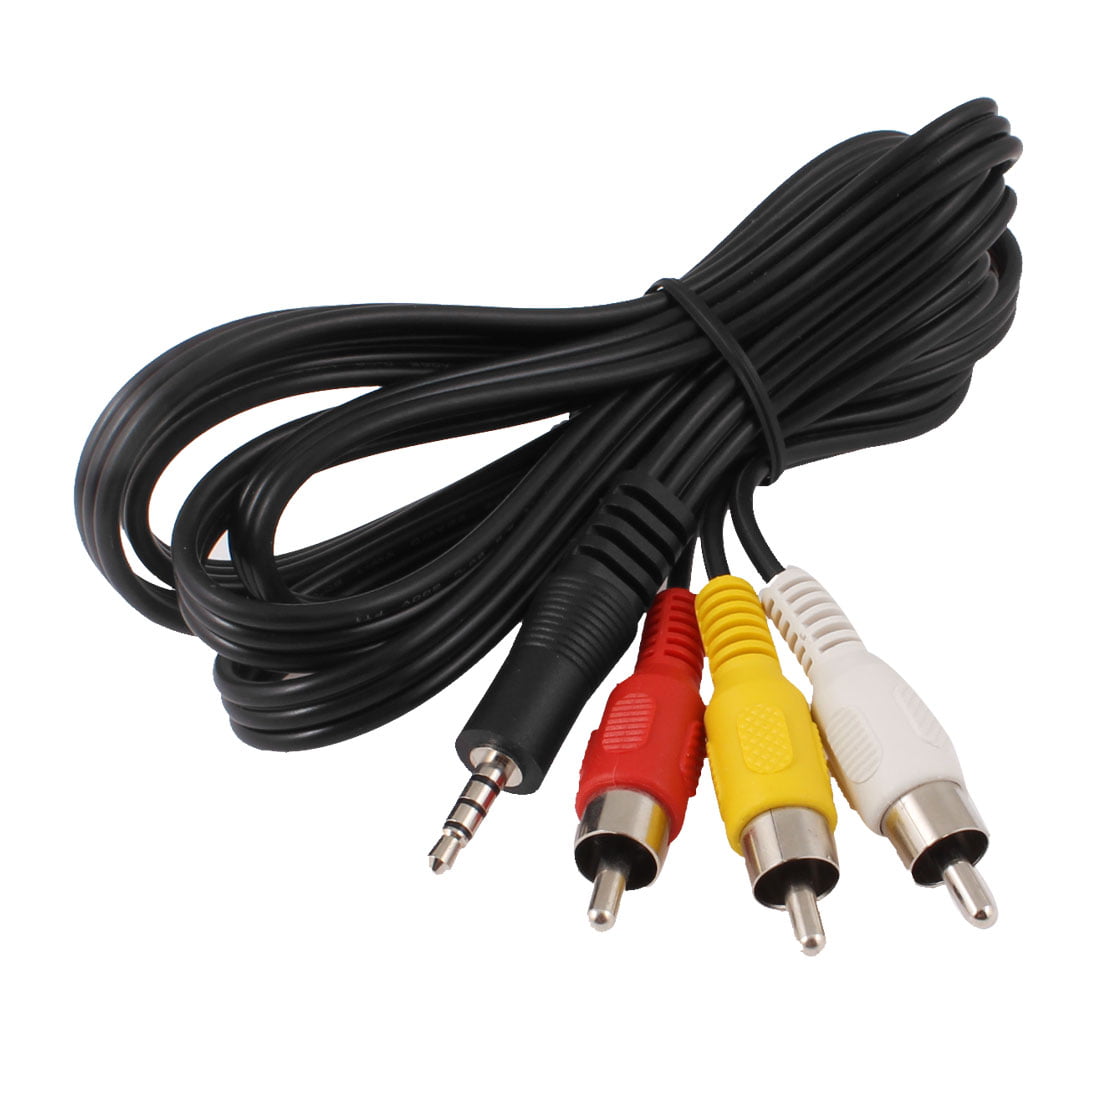 Hama Hama 122327 Audio Cable 3.5 mm Male/Male 1.5 m Black 4047443188878 